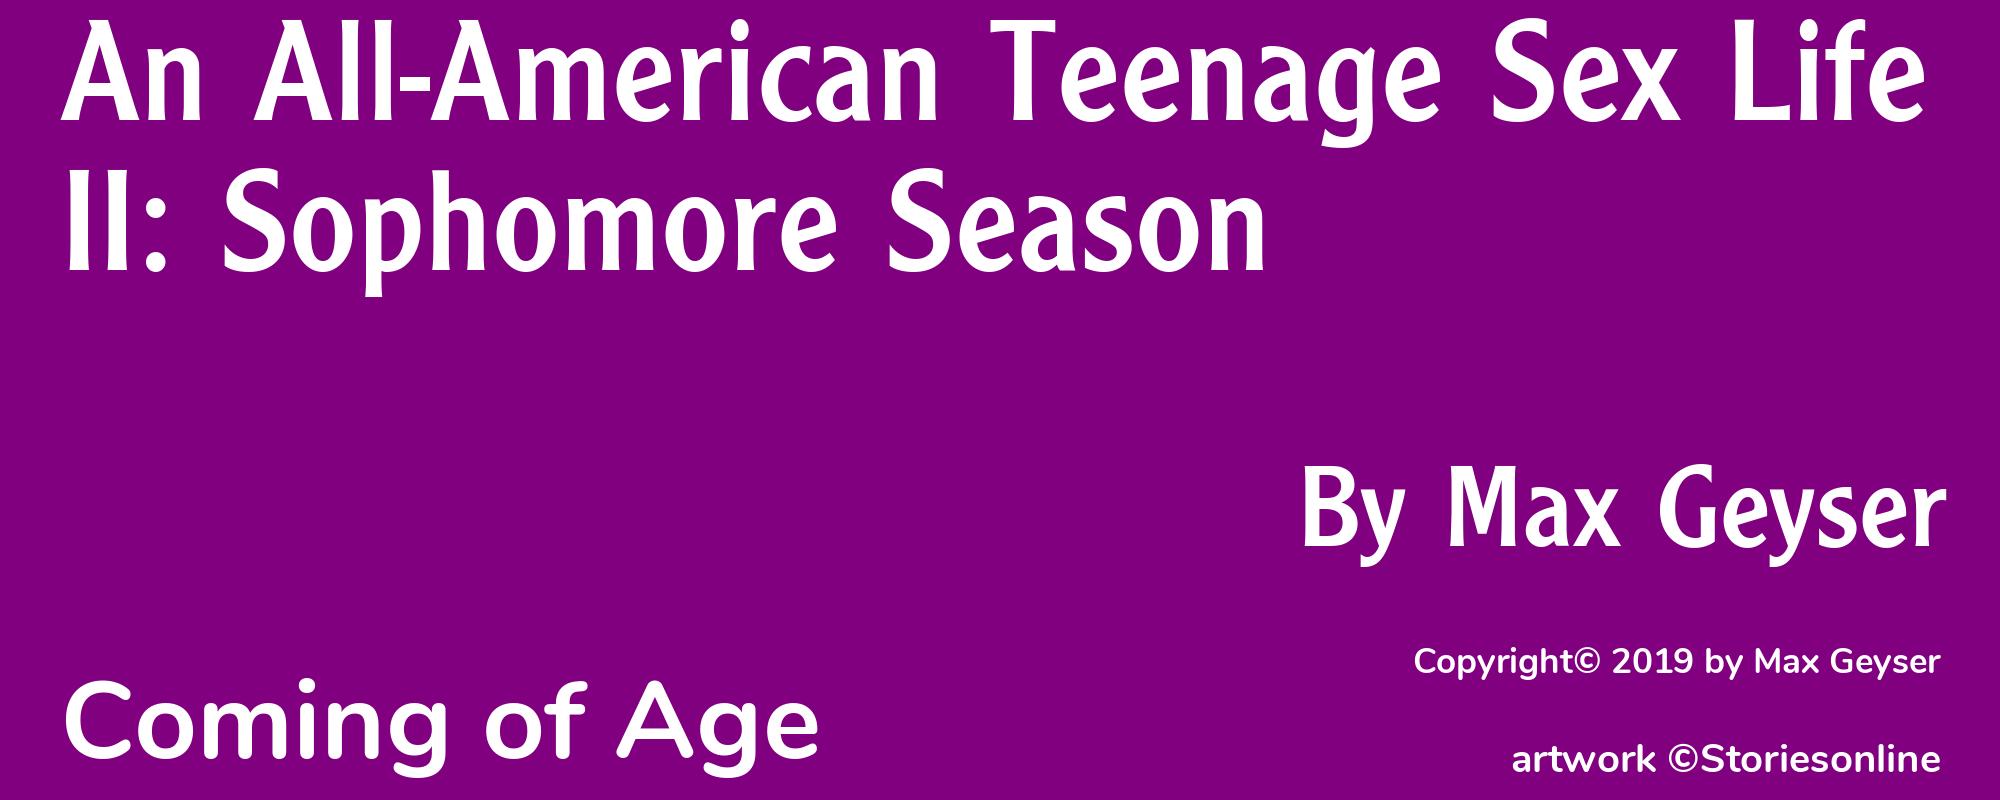 An All-American Teenage Sex Life II: Sophomore Season - Cover